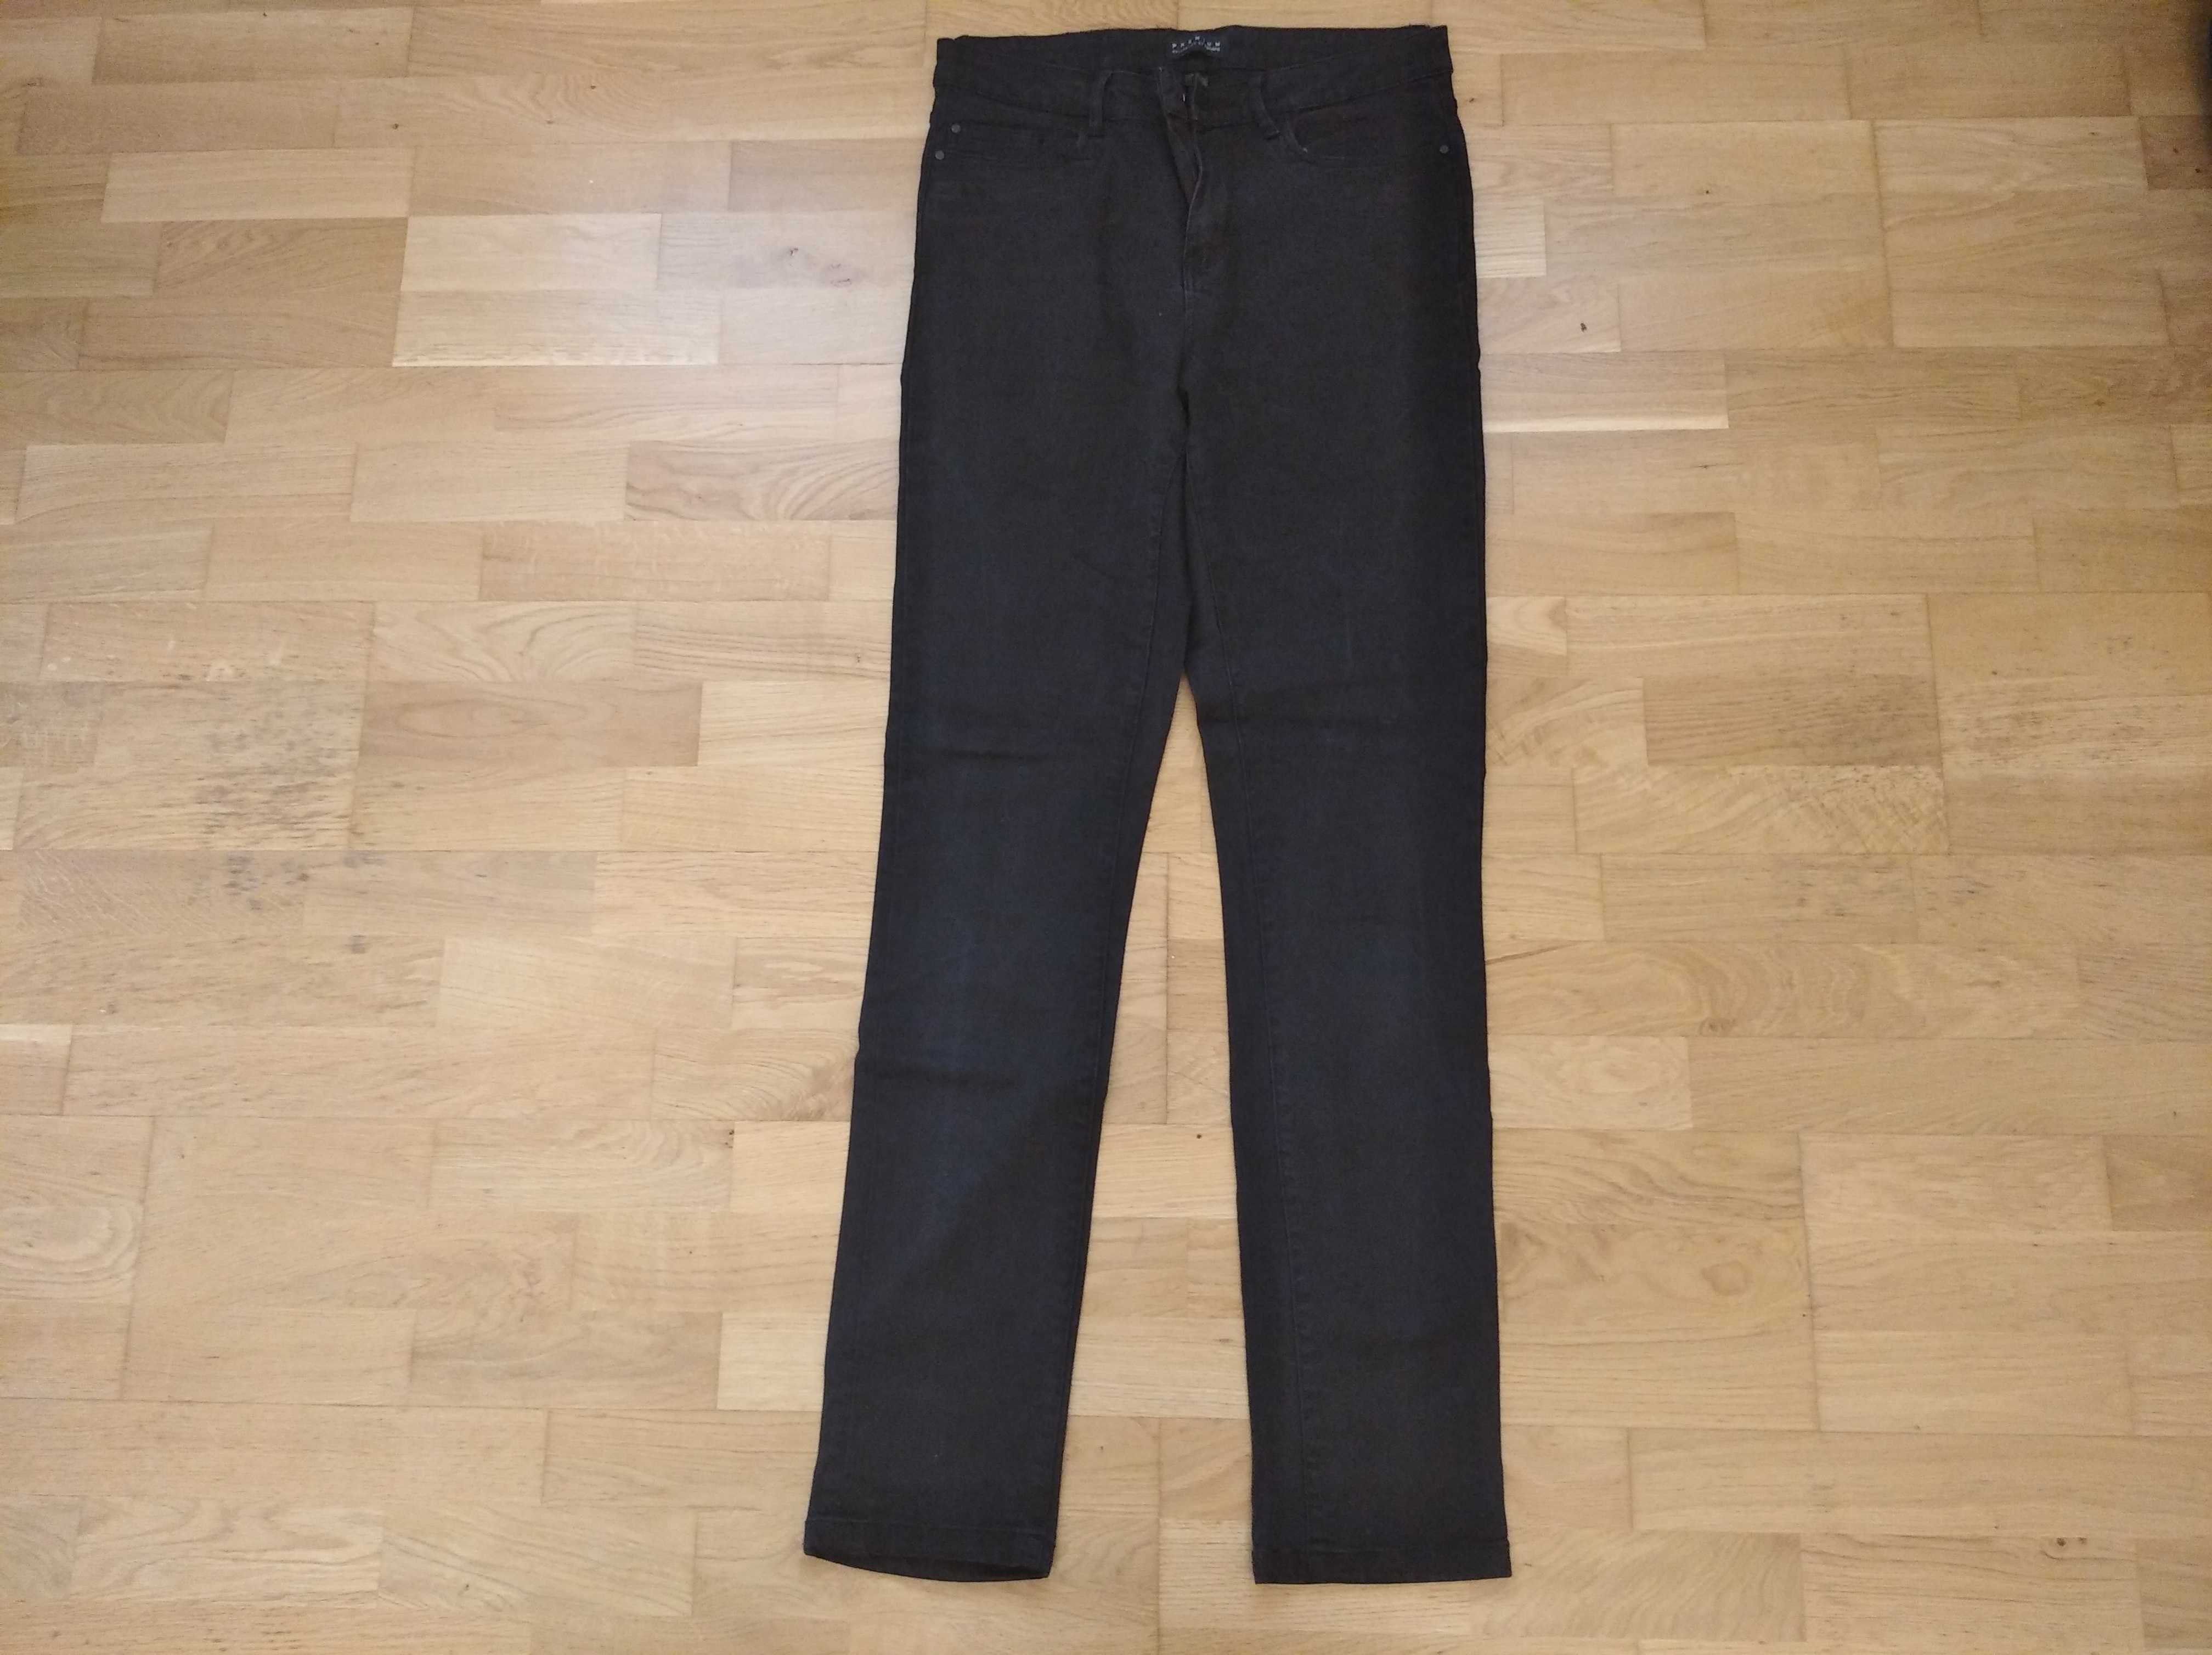 Spodnie damskie Esmara Premium 40 czarne jeansy skinny fit medium wais